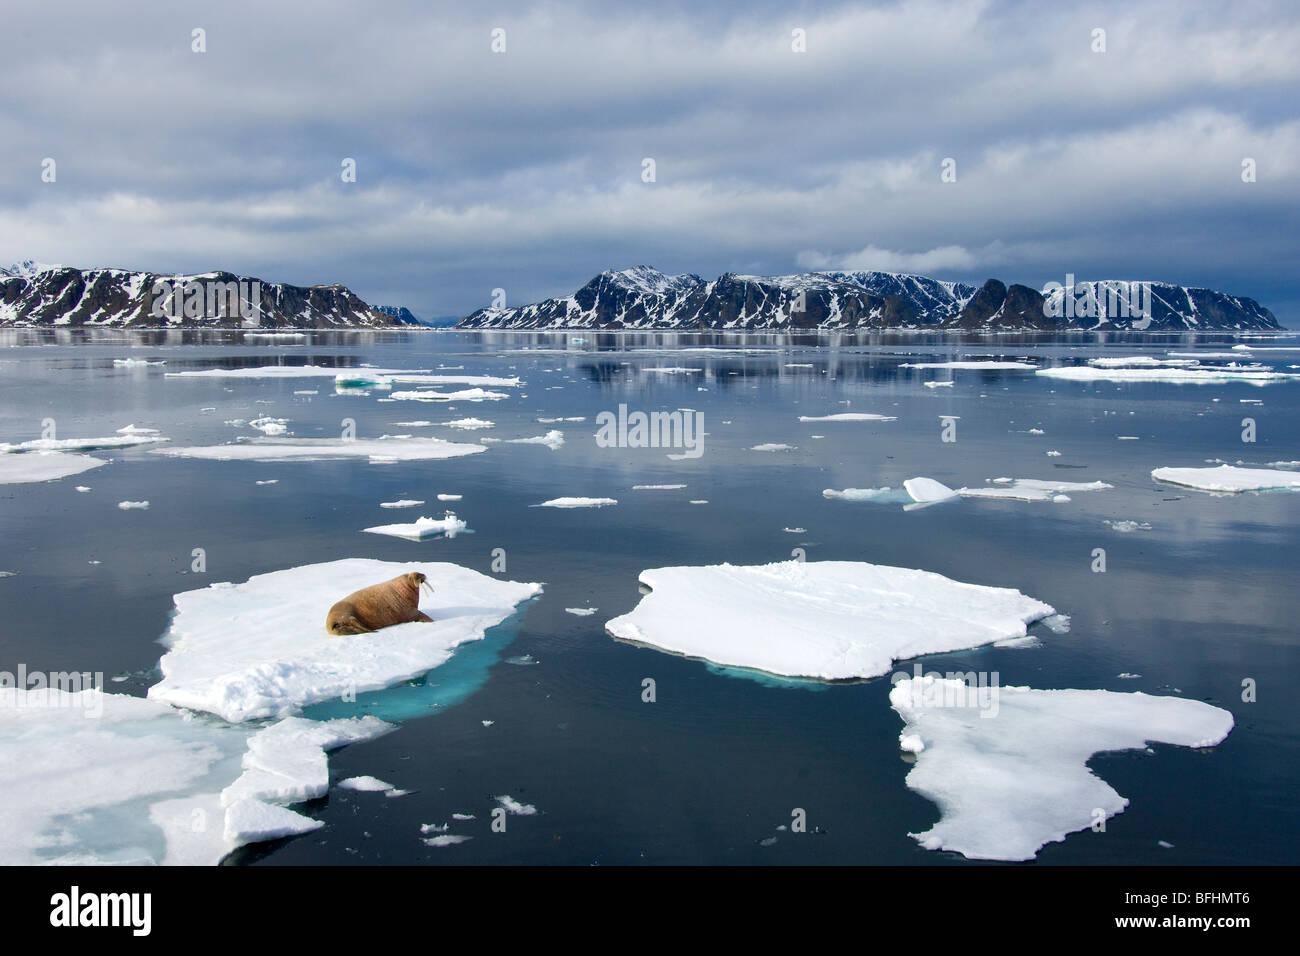 Atlantic walrus(es) (Odobenus rosmarus rosmarus) loafing on the pack ice, Svalbard Archipelago, Arctic Norway Stock Photo